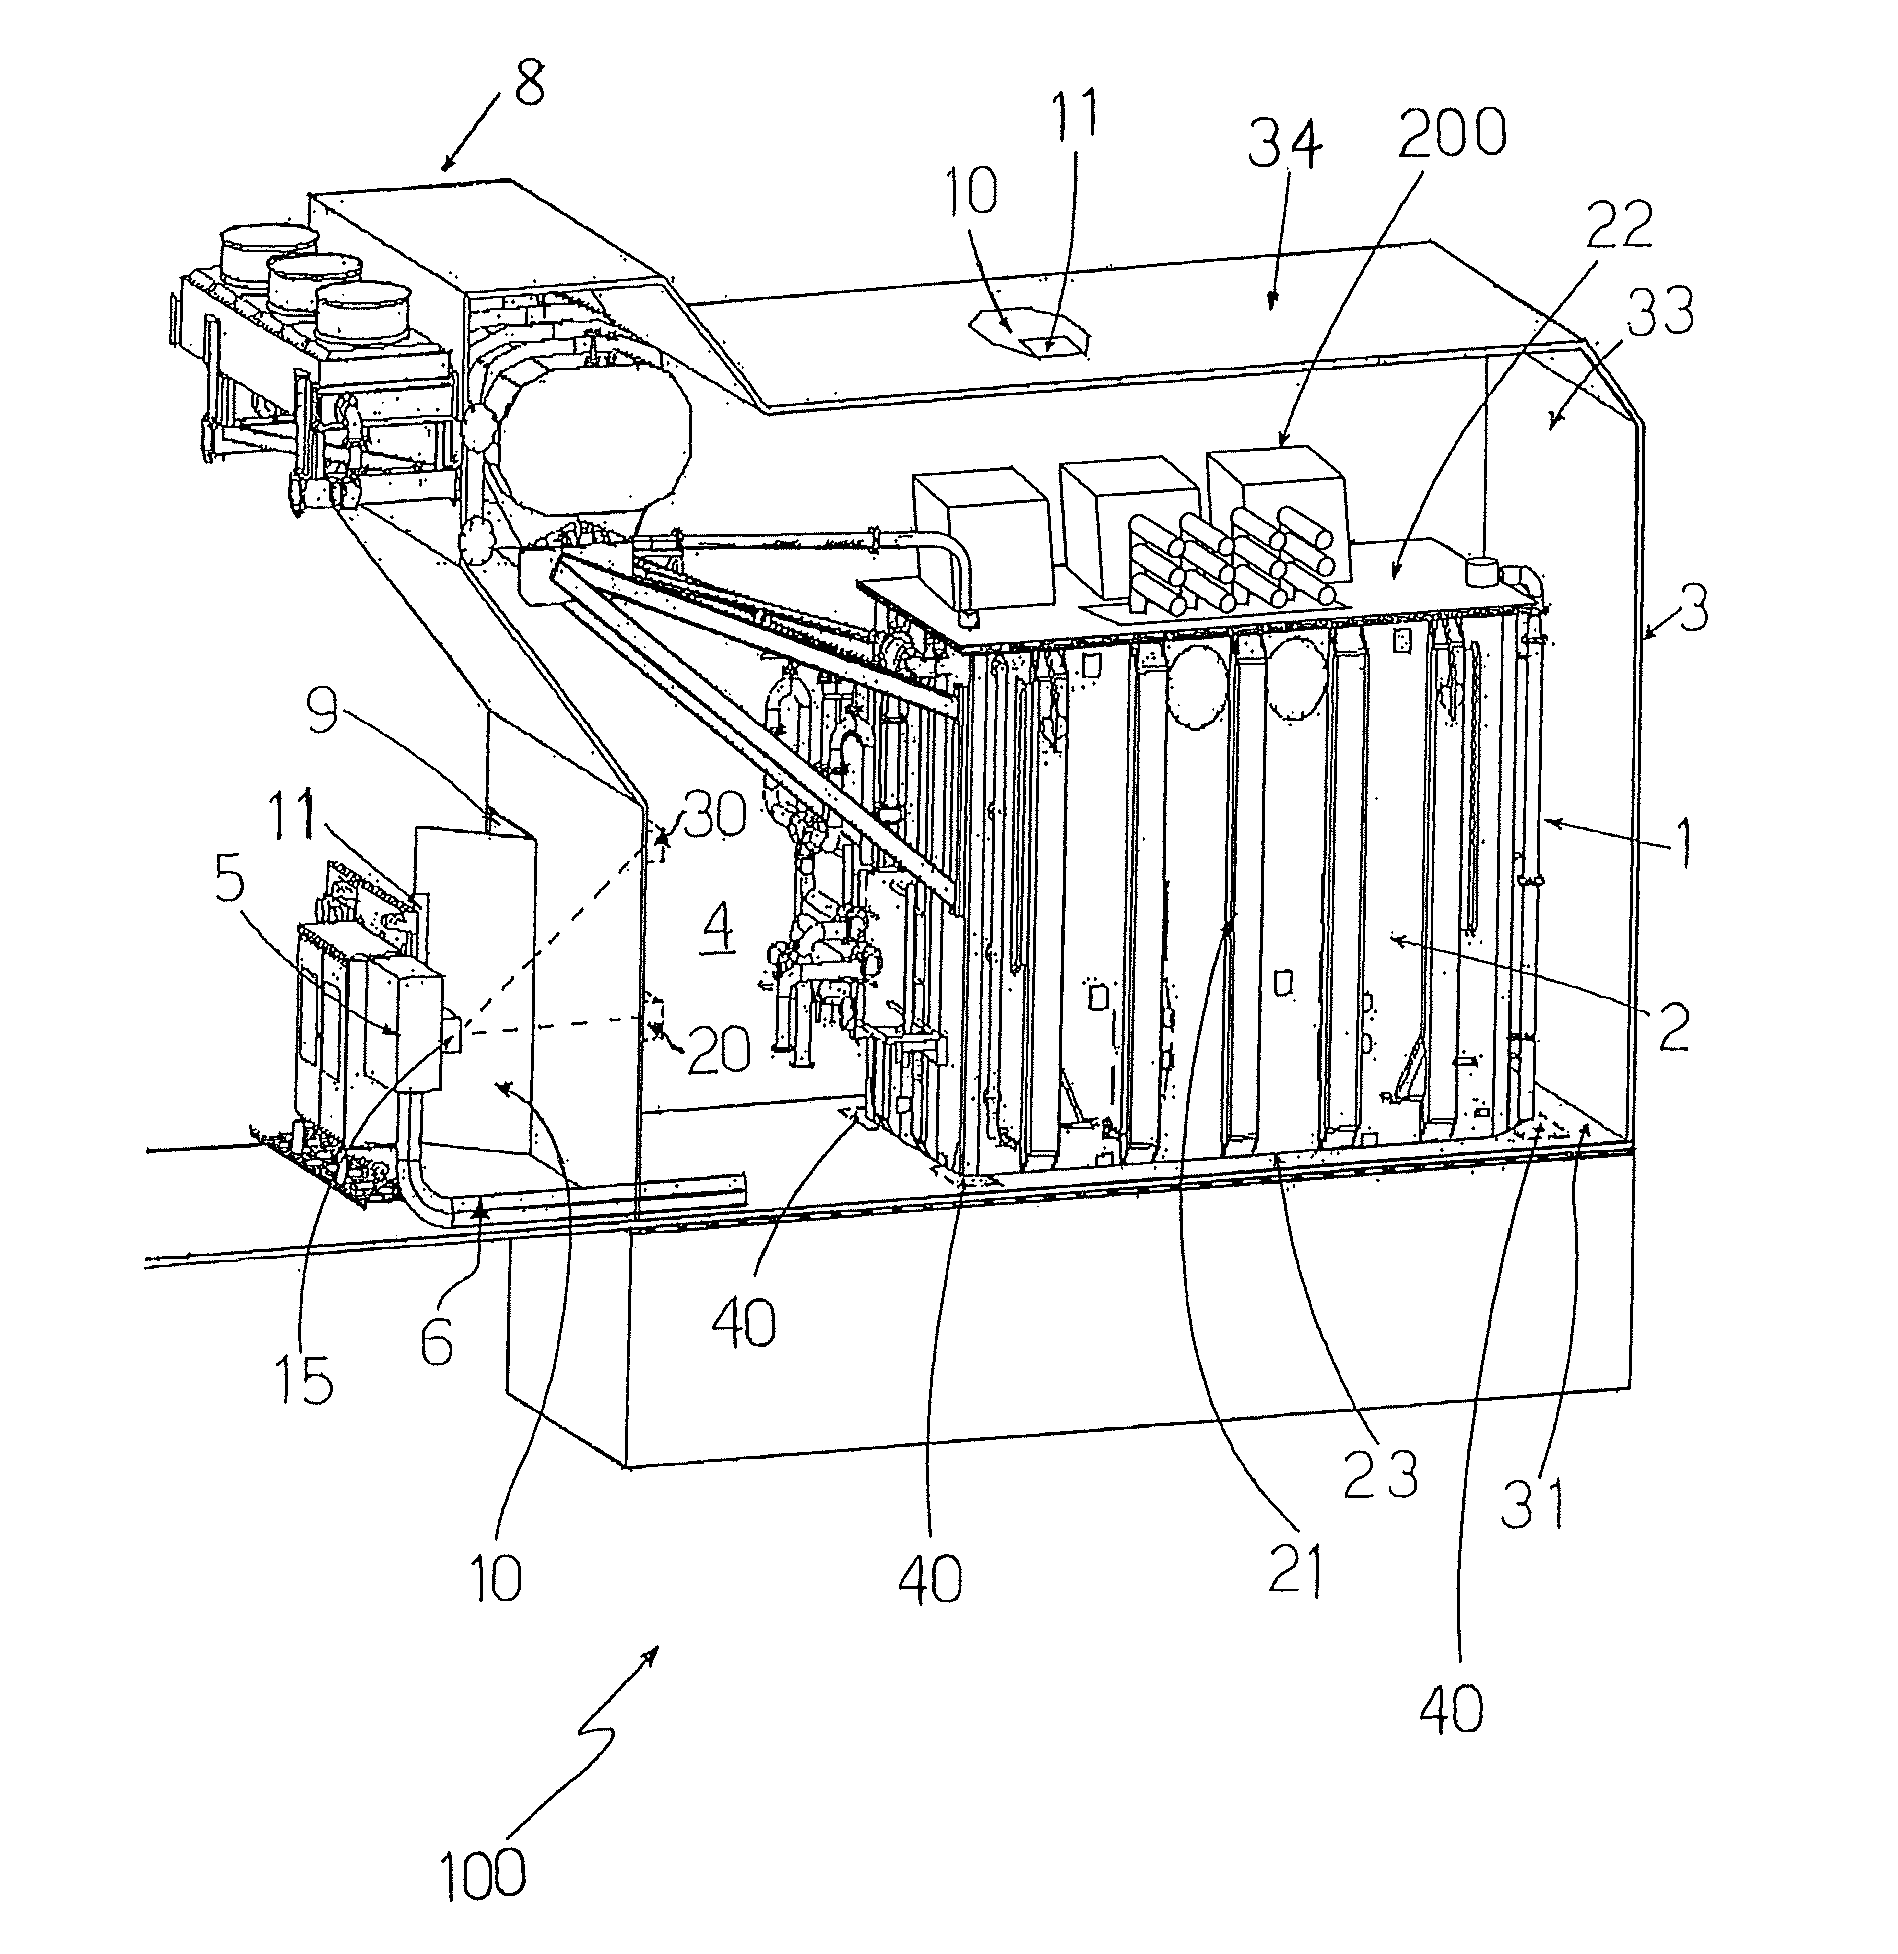 Transformer assembly